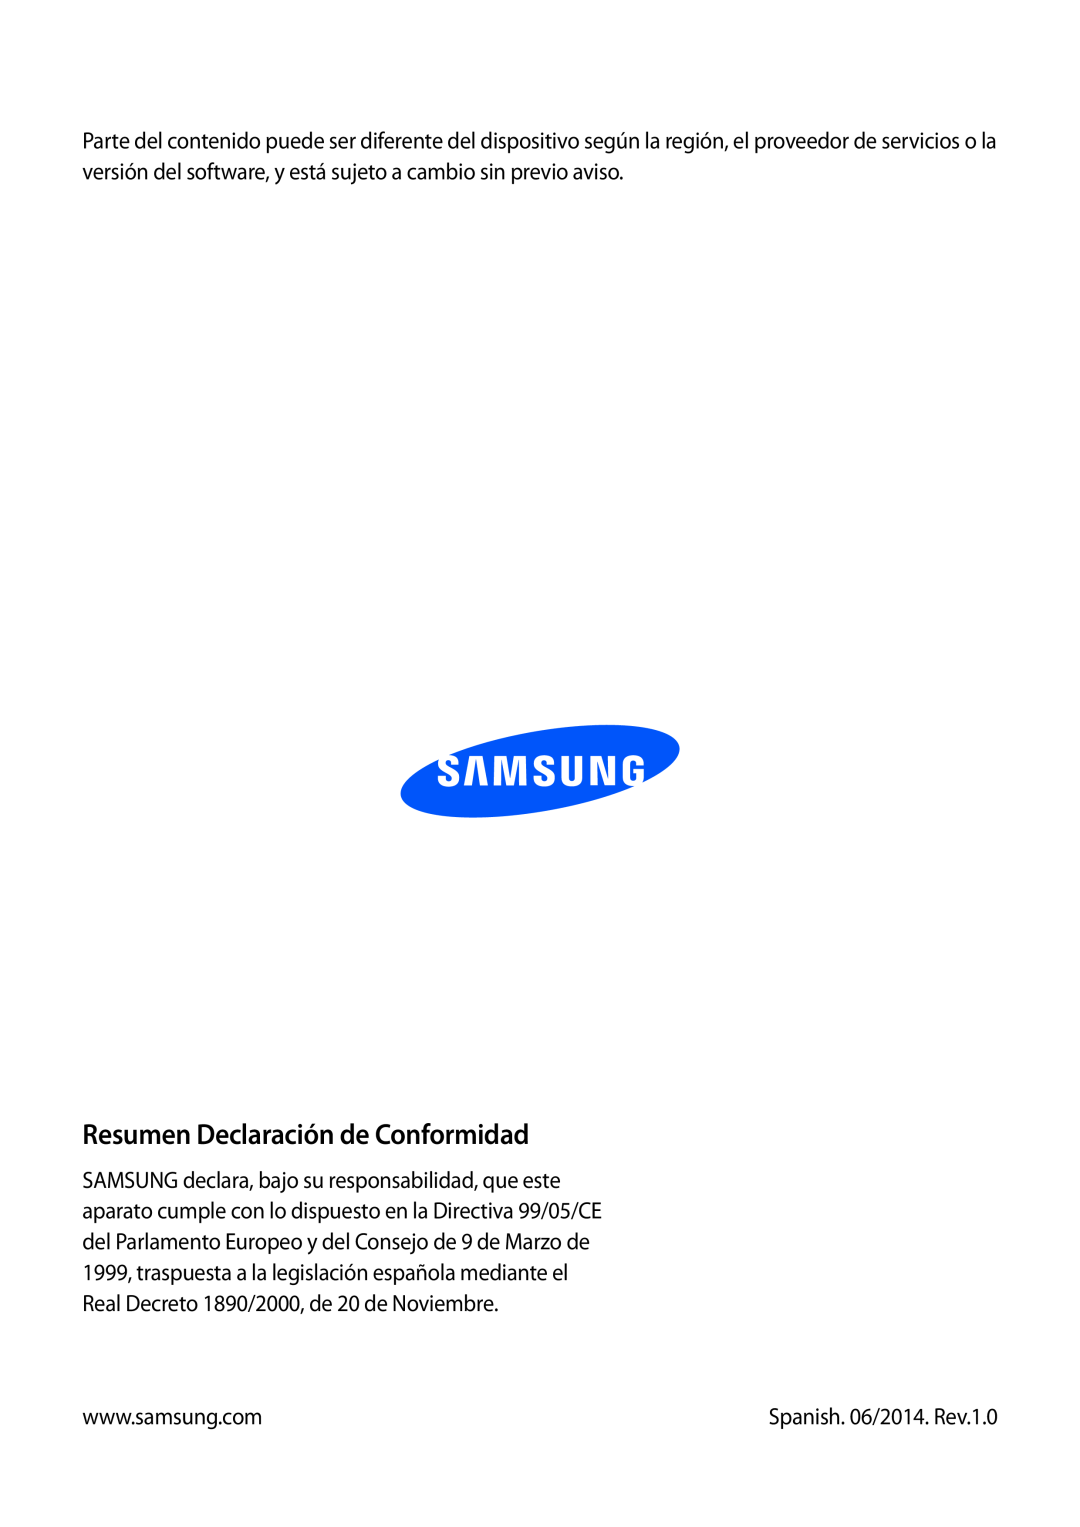 Samsung SM-V7000ZOAPHE, SM-V7000ZWADBT, SM-V7000ZKAXEO manual Resumen Declaración de Conformidad, Spanish. 06/2014. Rev.1.0 